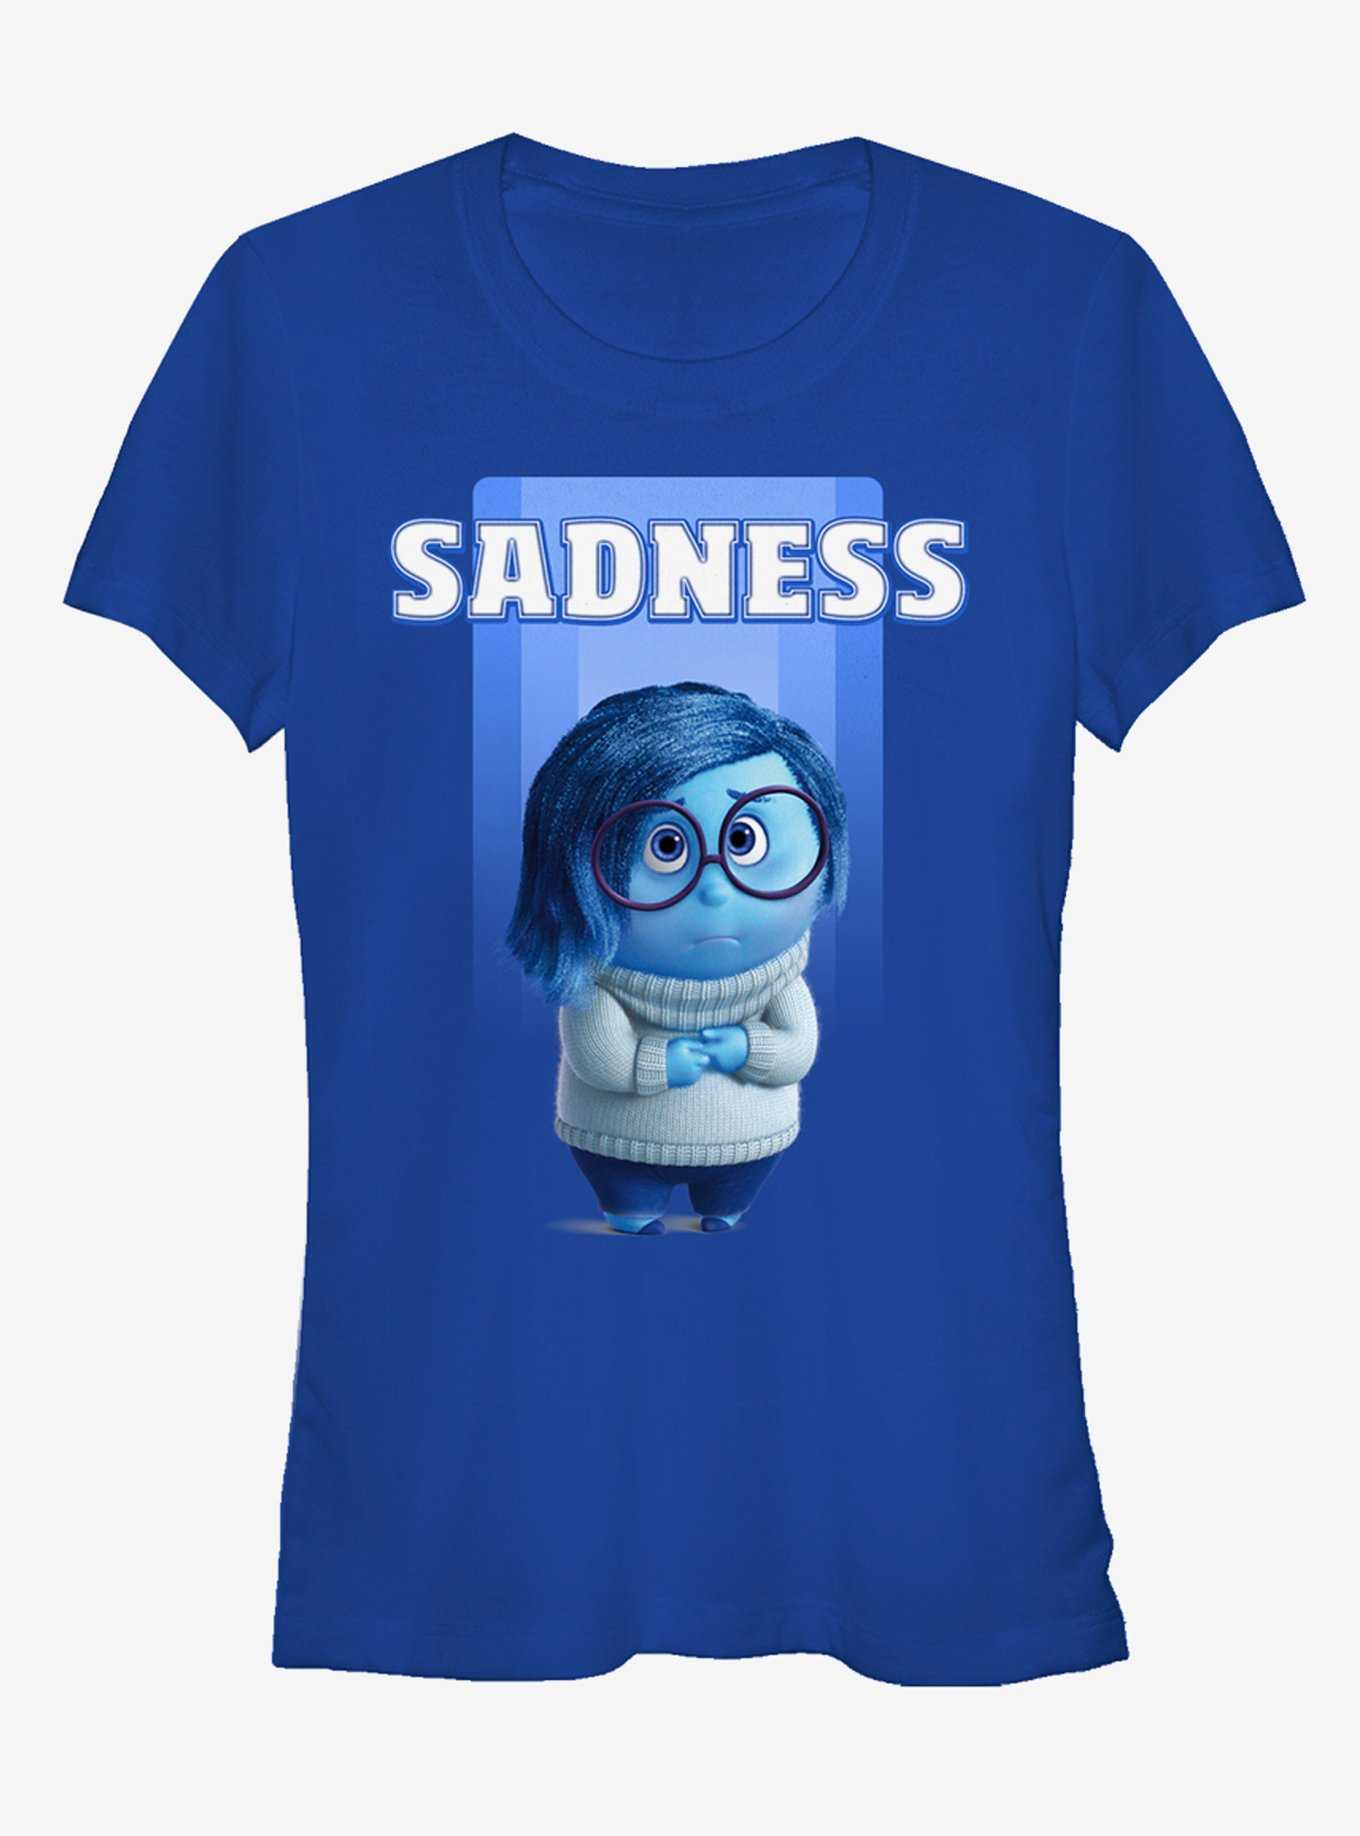 Disney Pixar Inside Out Sadness Portrait Girls T-Shirt, , hi-res